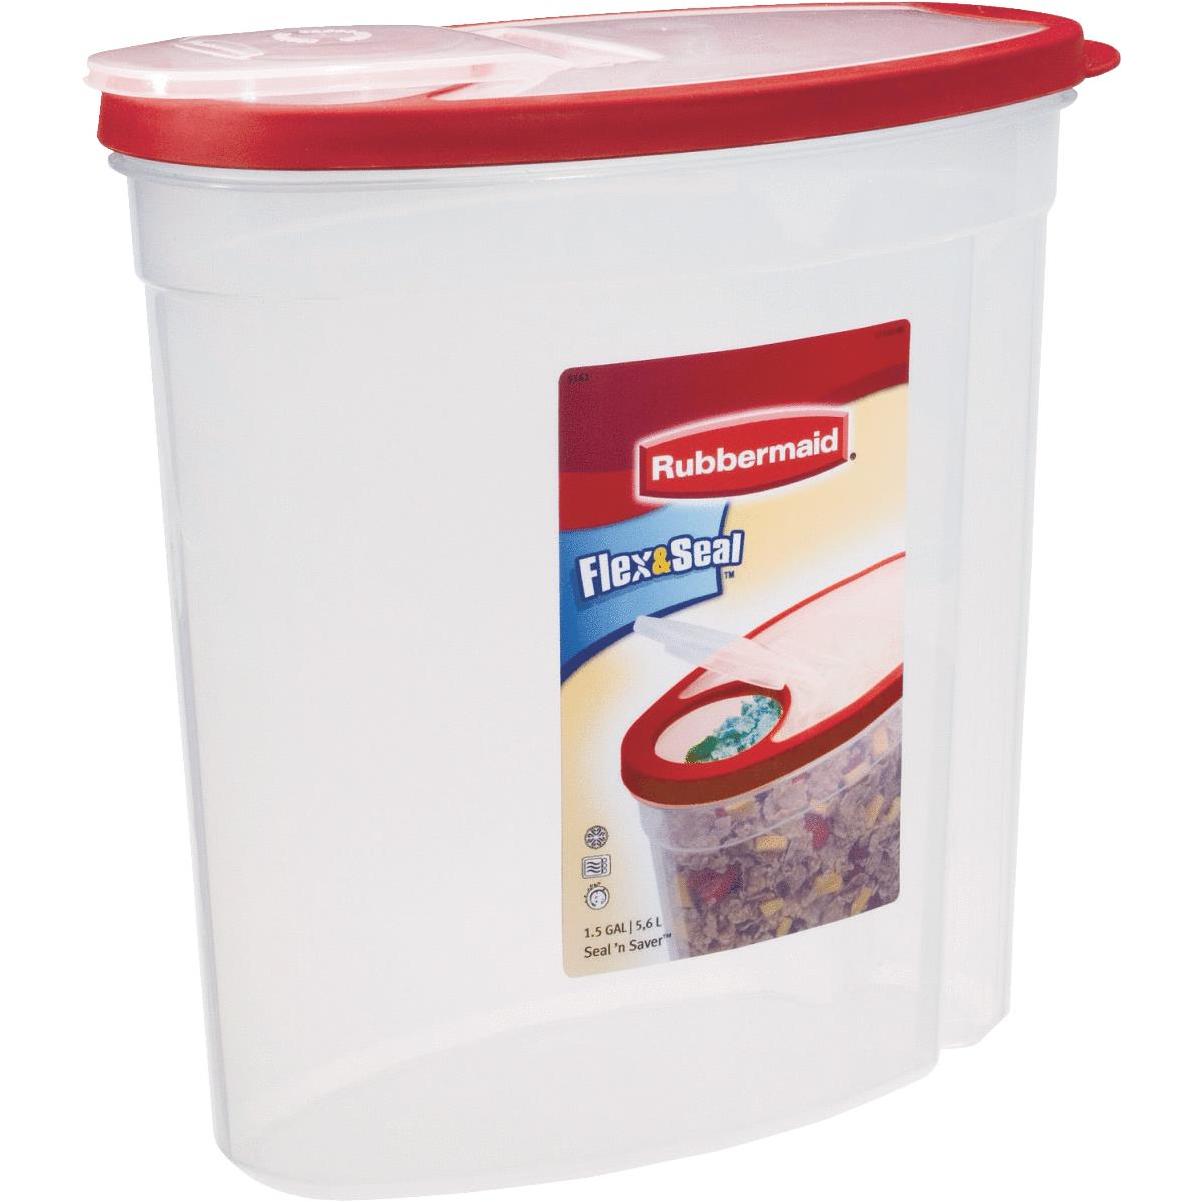 1-Quart Freezer Leftover Food Storage Containers, 3-Pack - $4.99